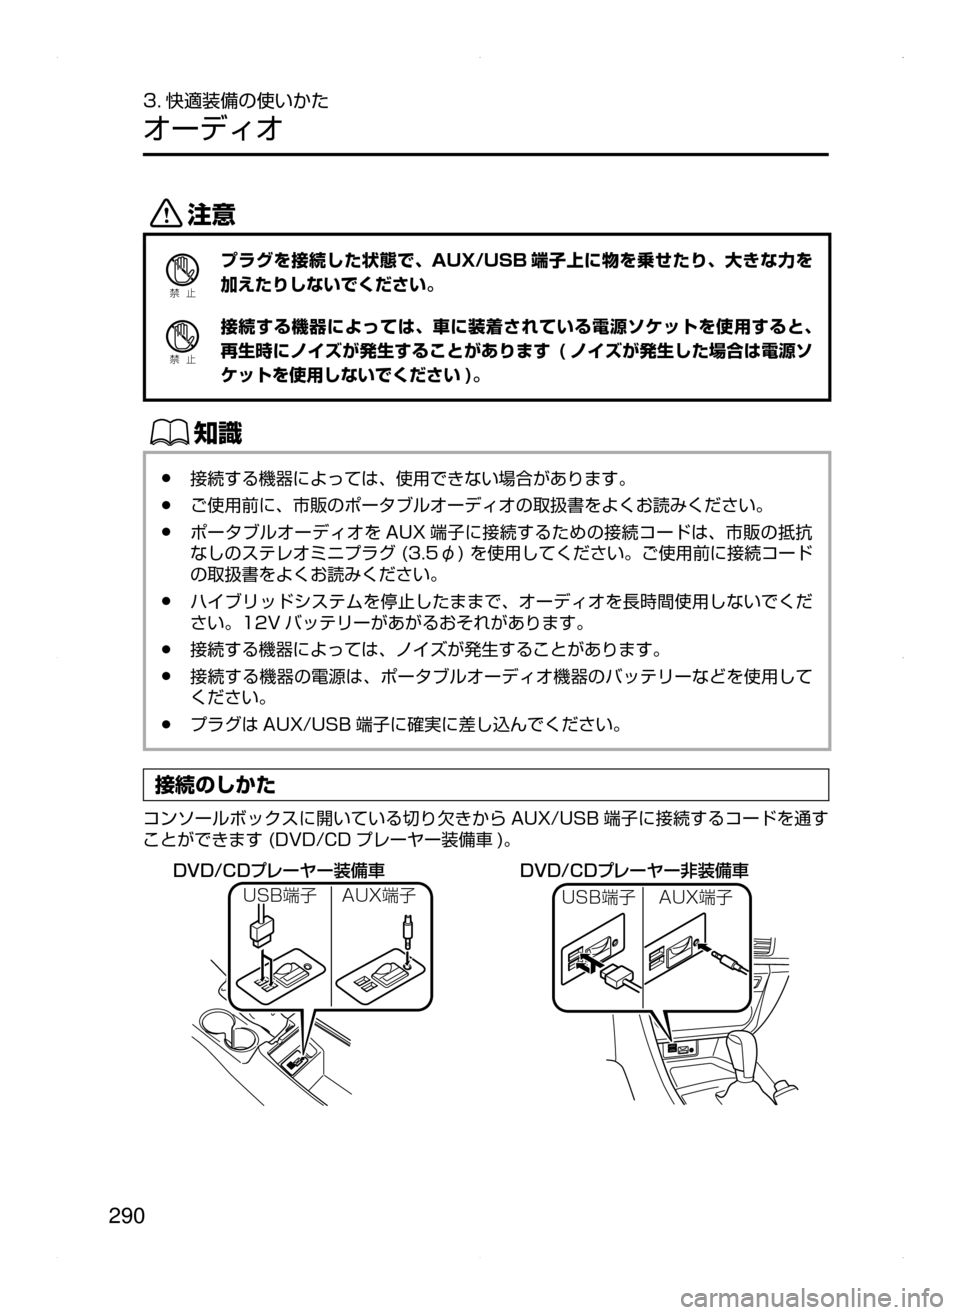 MAZDA MODEL AXELA HYBRID 2015  アクセラハイブリッド｜取扱説明書 (in Japanese)  290
3. 快適装備の使いかた
オーディオ
«™
Ð��­
プラグを接続した状態で､ AUX/USB 端子上に物を乗せたり､ 大きな力を
加えたりしないでくださ�